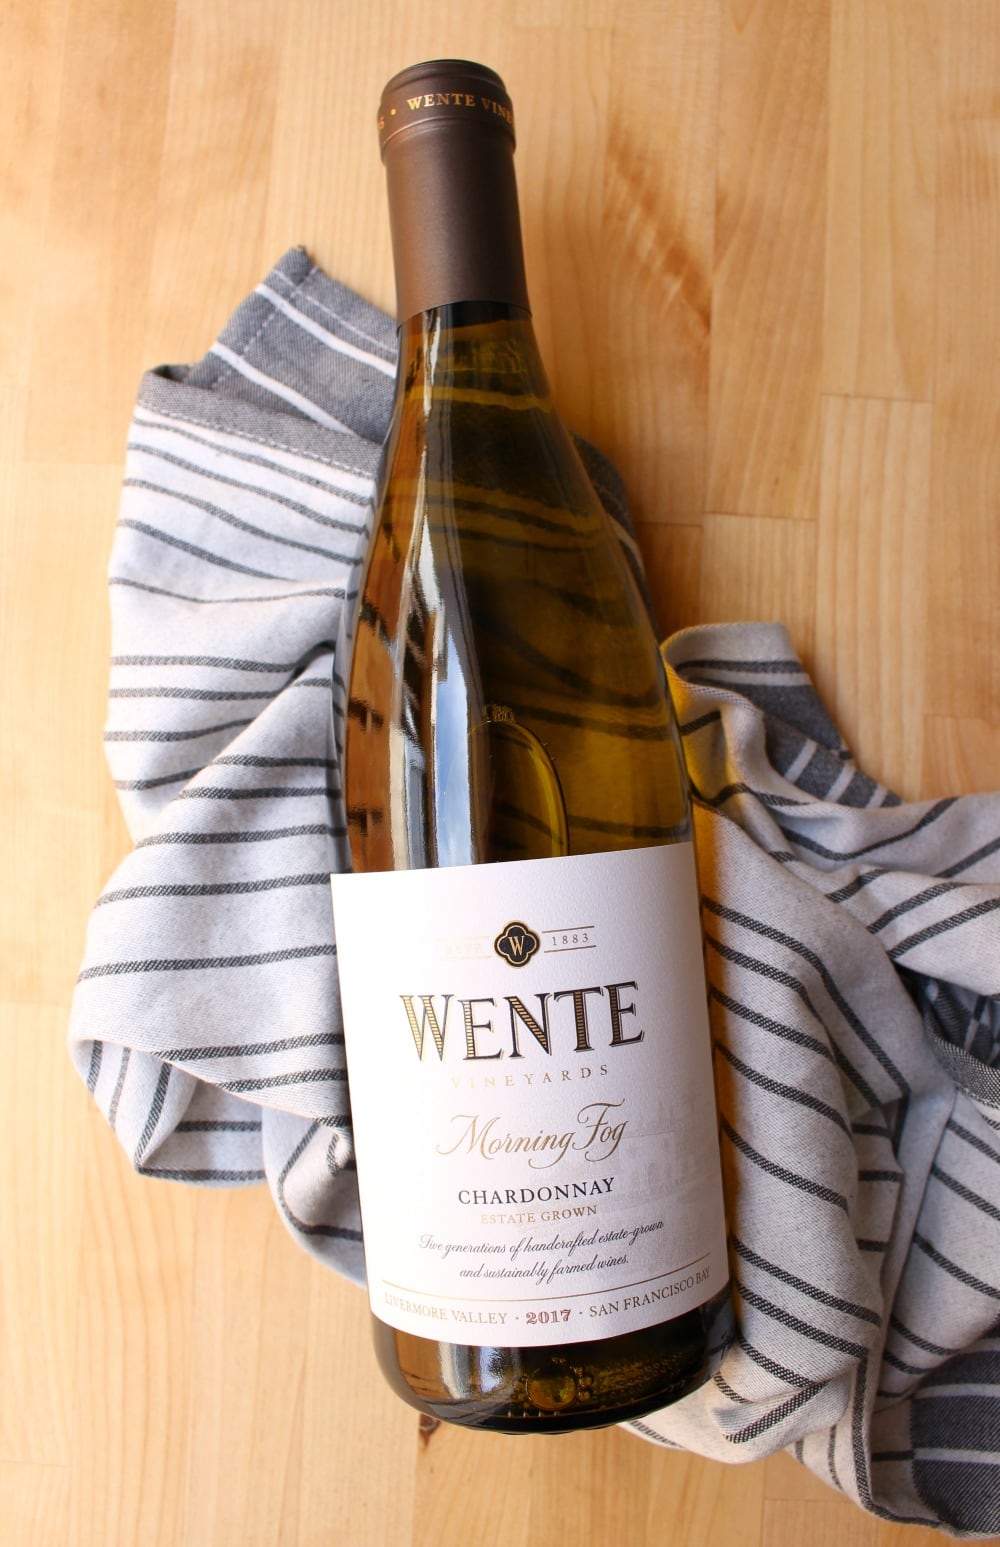 A bottle of Wente Vineyards Morning Fog Chardonnay over a kitchen towel.